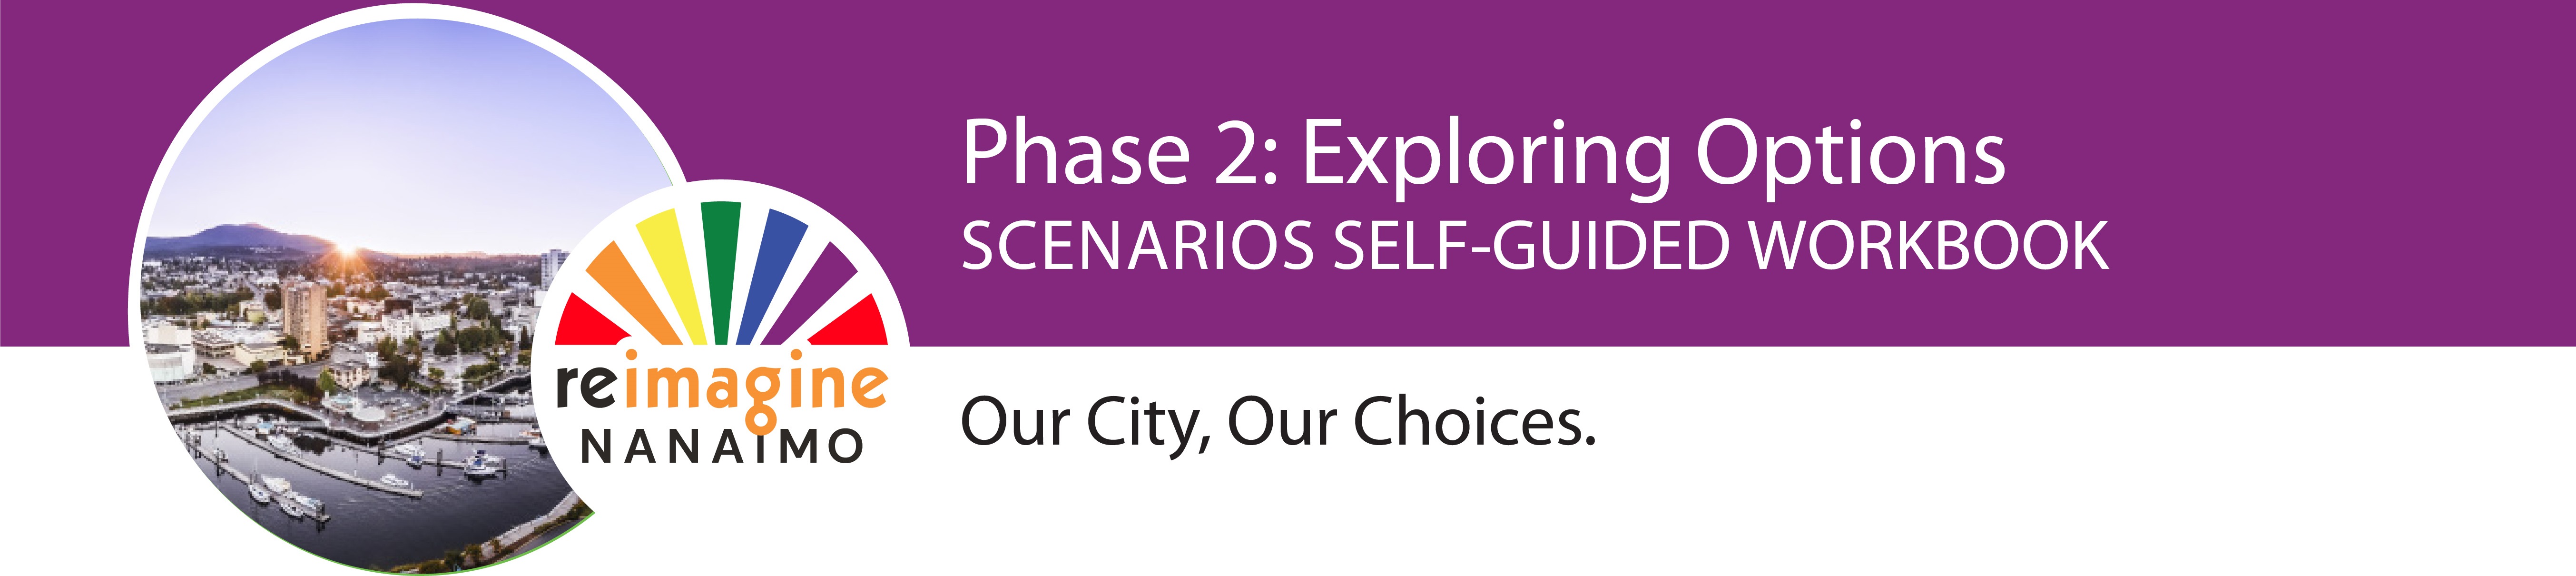 Phase 2 - Purple Scenario Self-Guided Workbook Banner